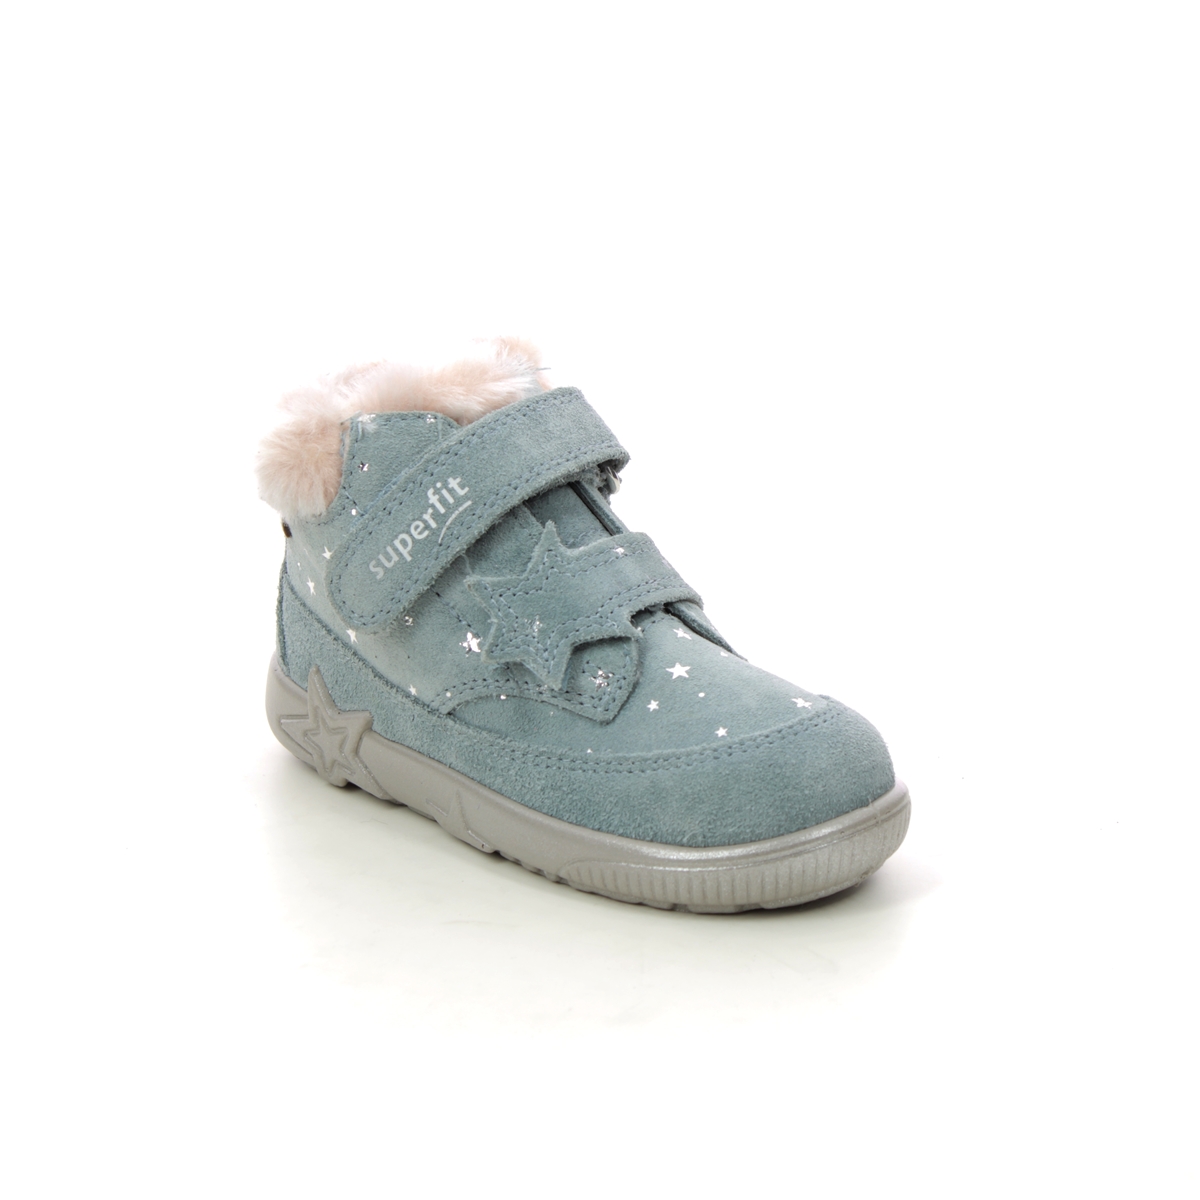 Superfit Starlight Gtx Light Blue Kids Toddler Girls Boots 1006445-7500 In Size 23 In Plain Light Blue For kids